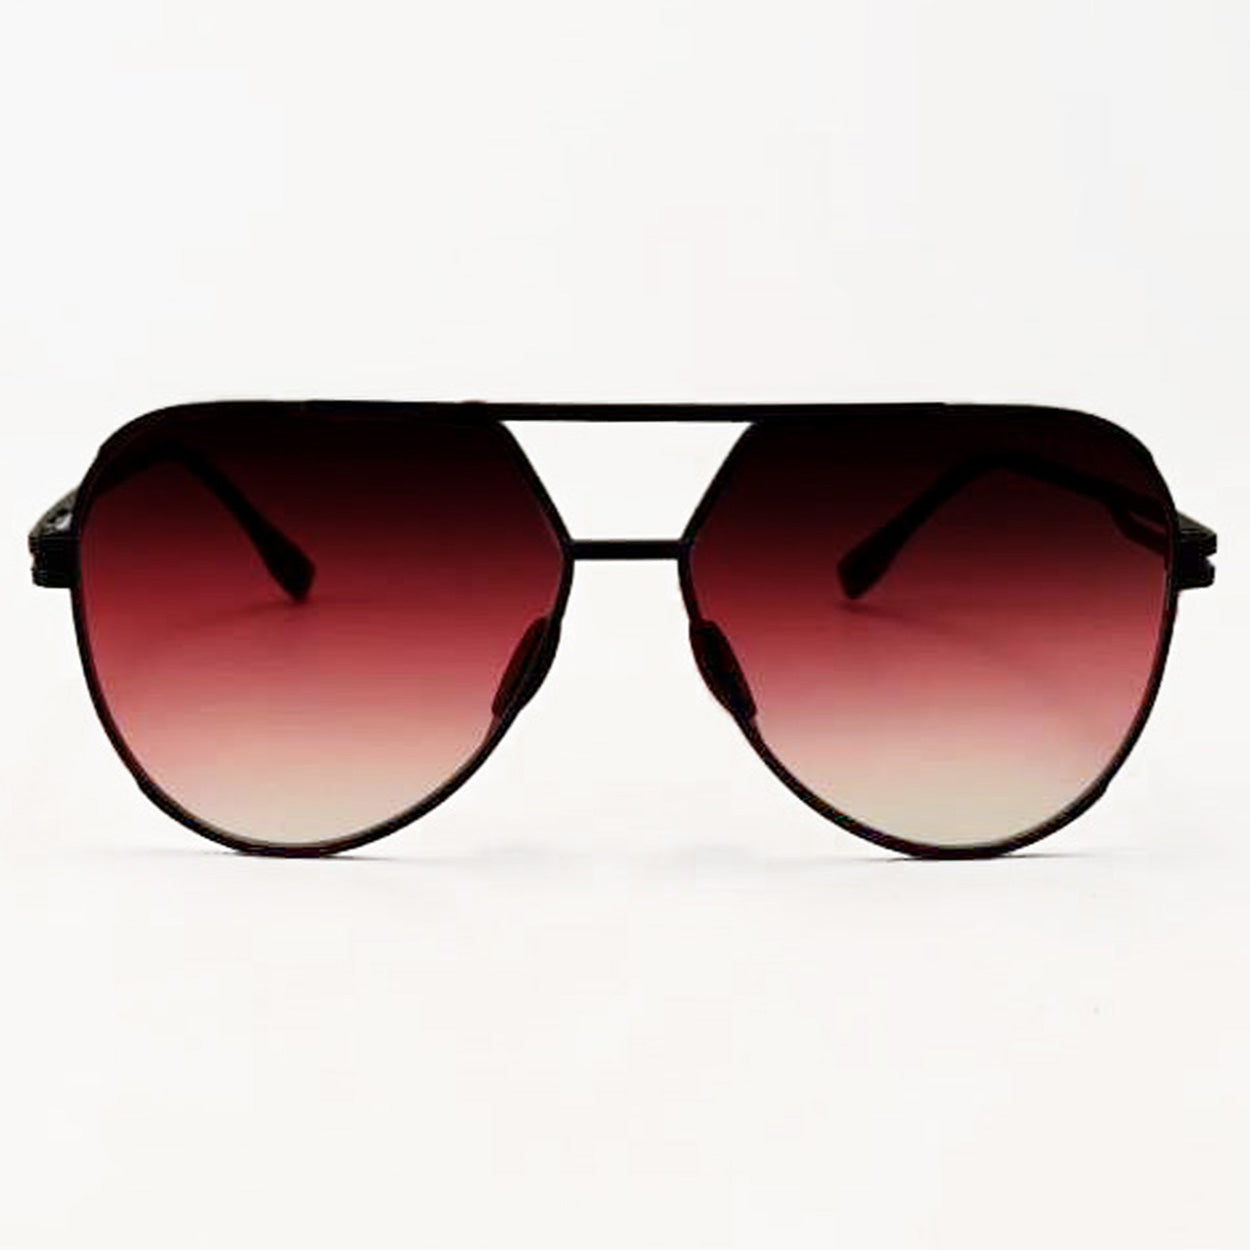 Untangled x Emily - Tangle Free - Ruby Aviator Sunglasses